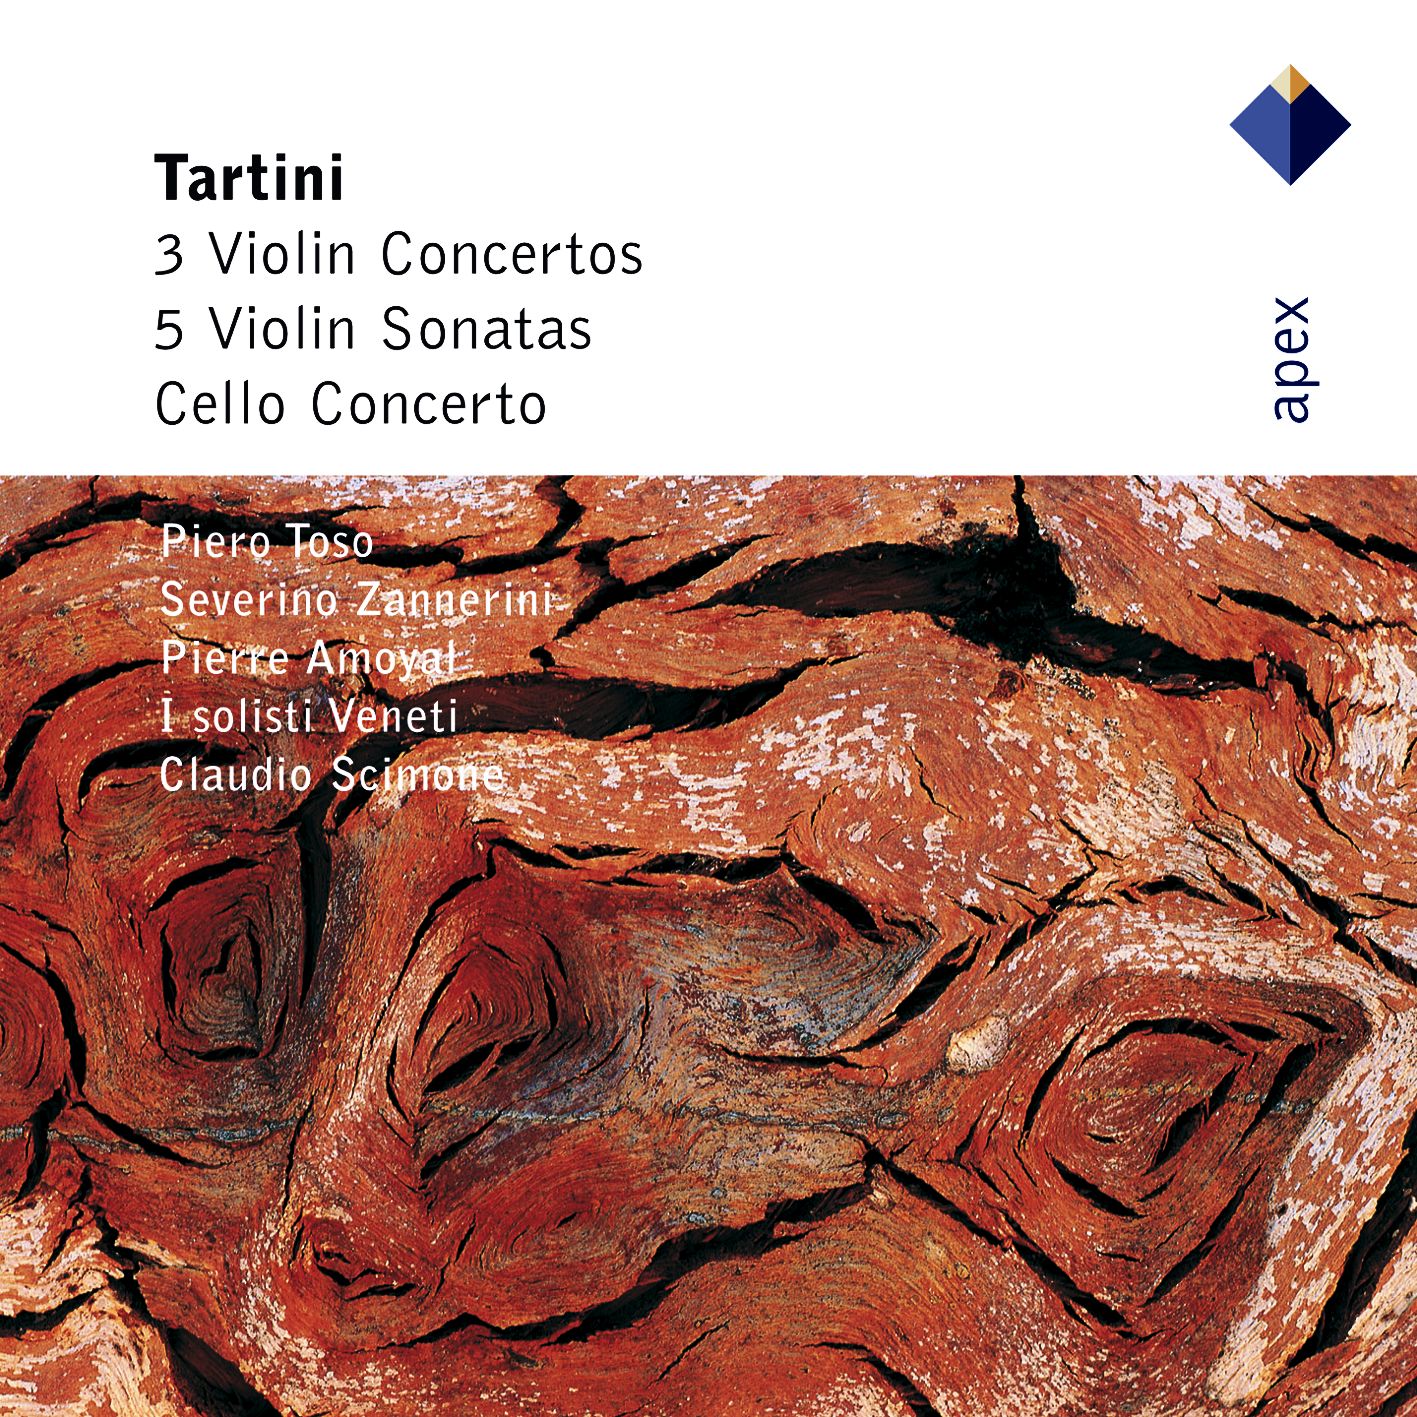 Tartini : Violin Concerto in D minor D45 : III Presto